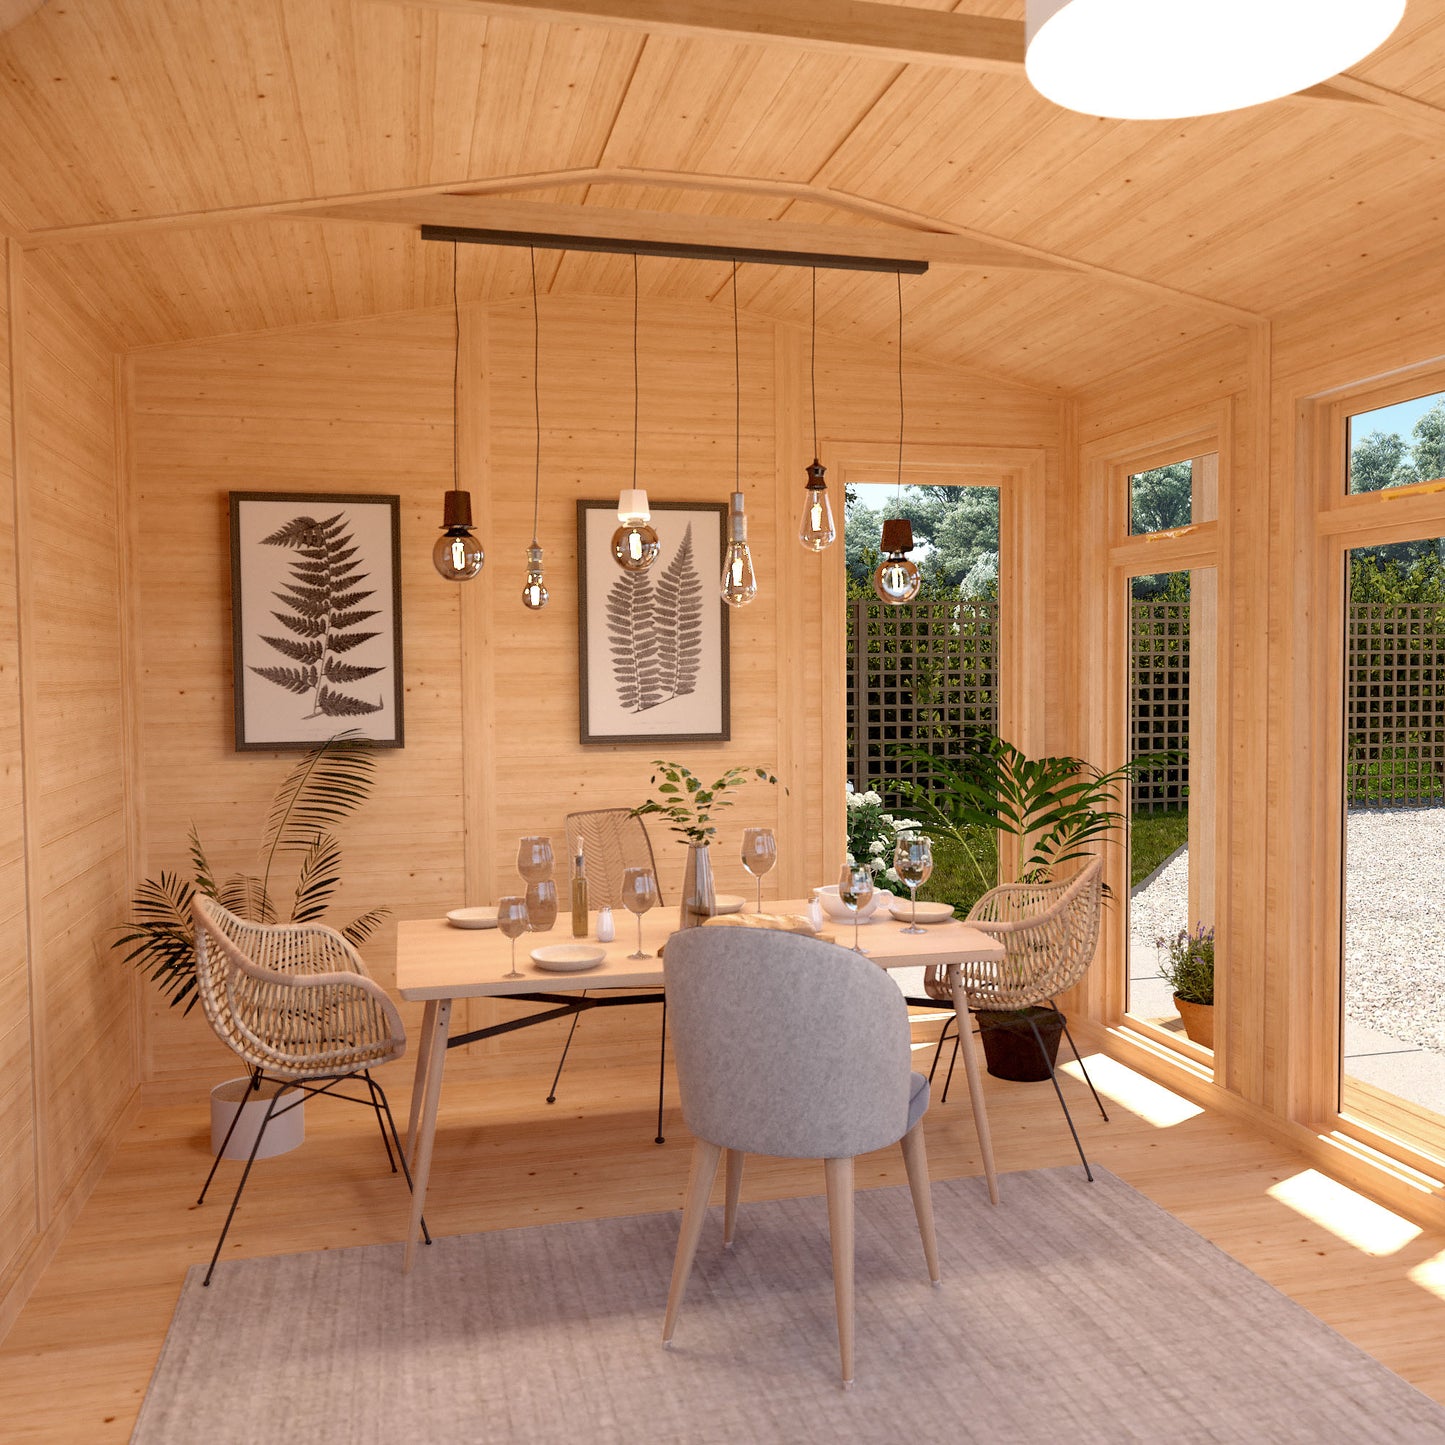 The Rufford 5m x 4m Premium Insulated Garden Room